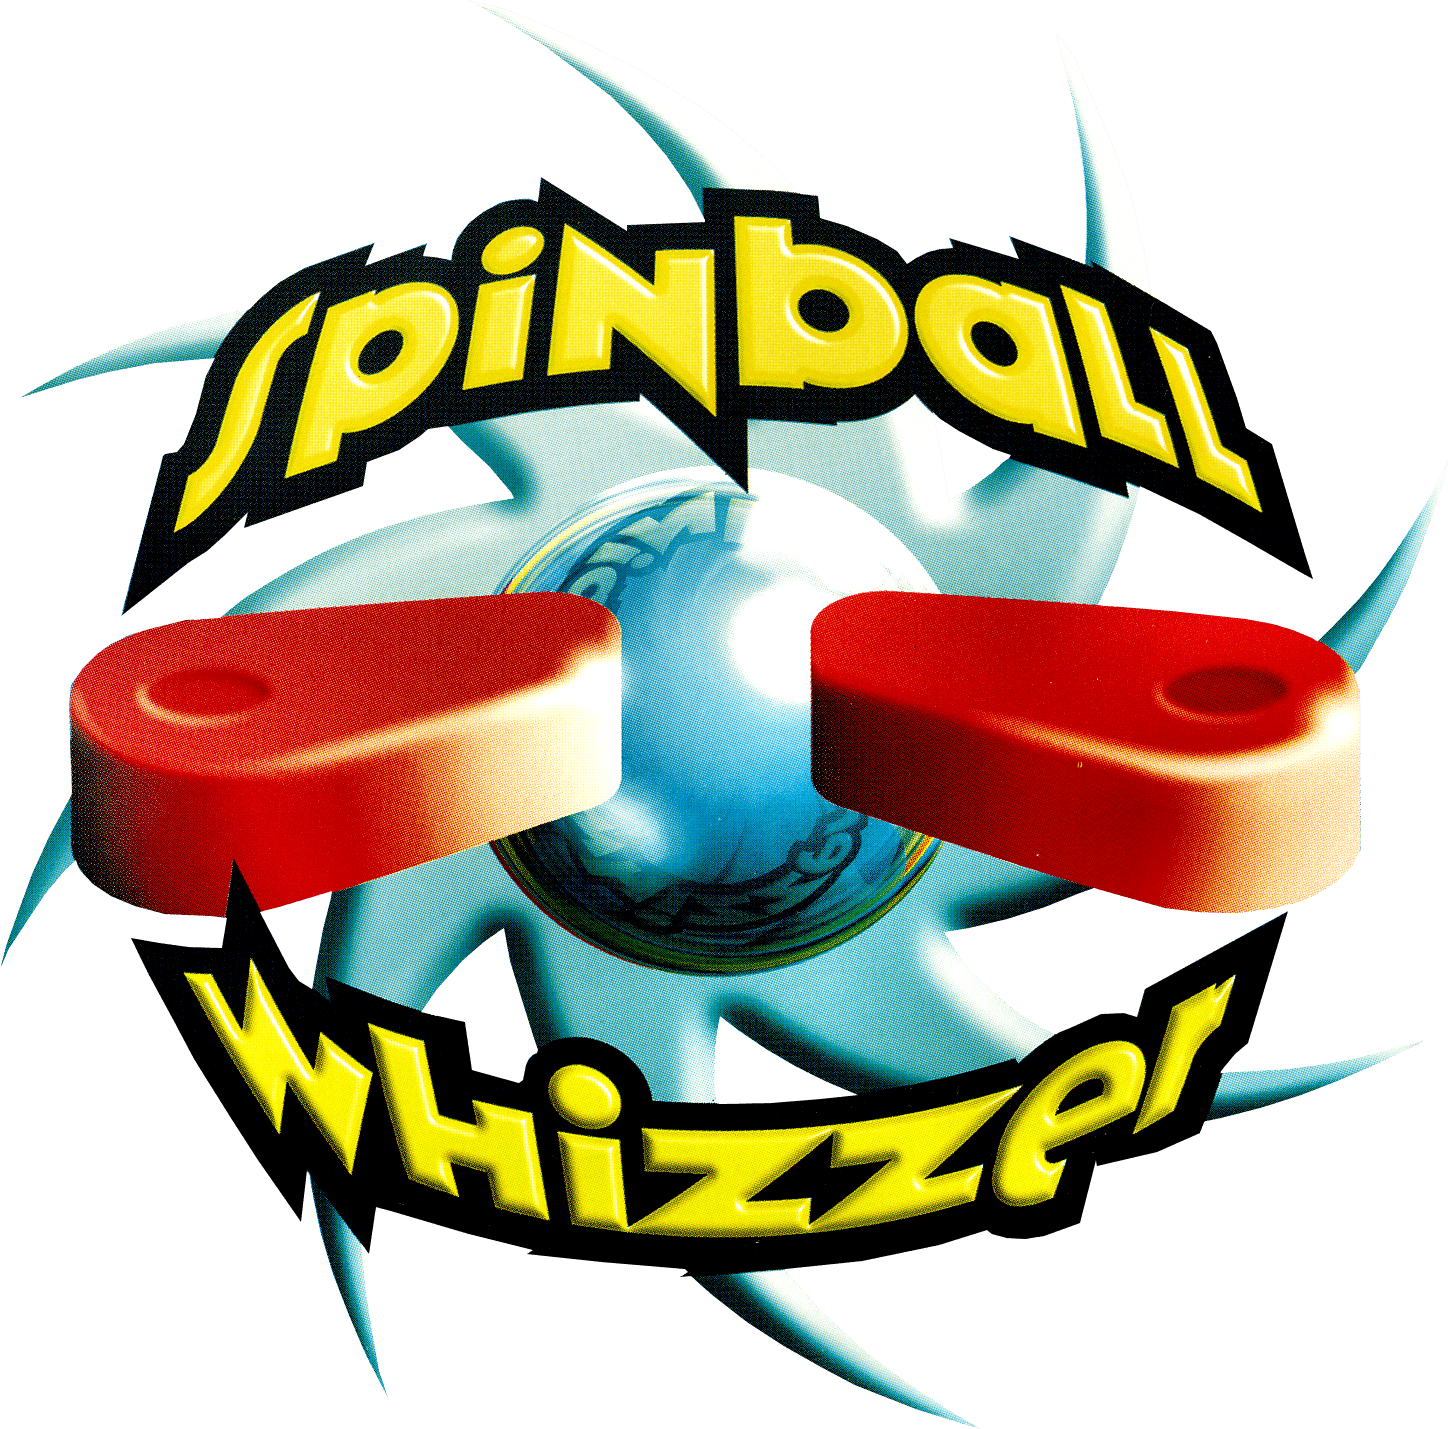 Whizzer Logo - Spinball Whizzer Archive premier Alton Towers